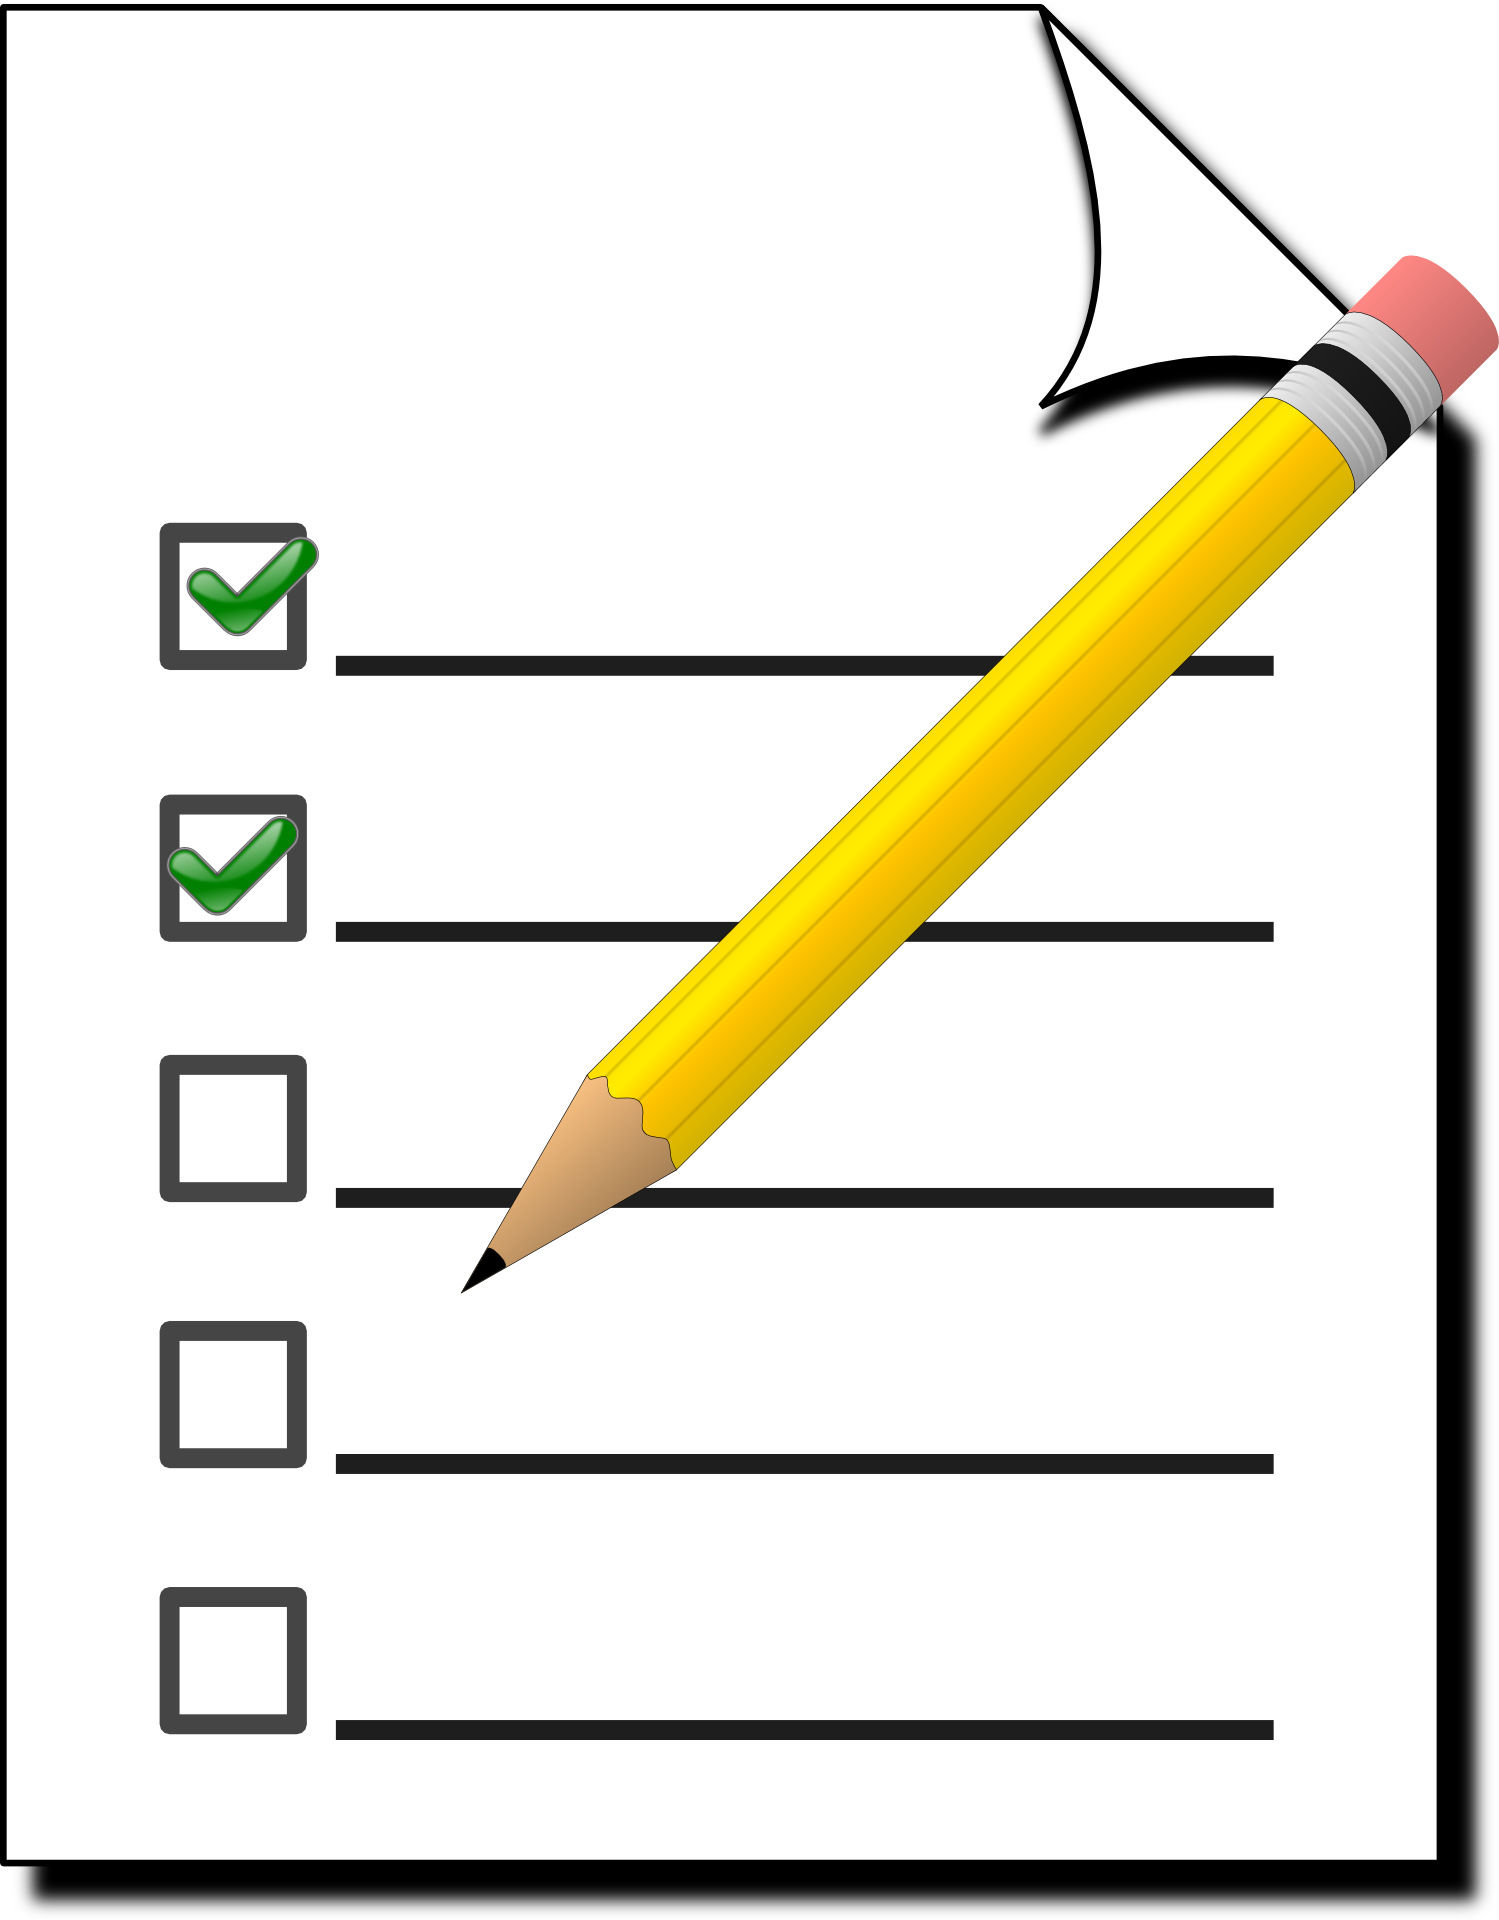 Pencil checking off checklist items